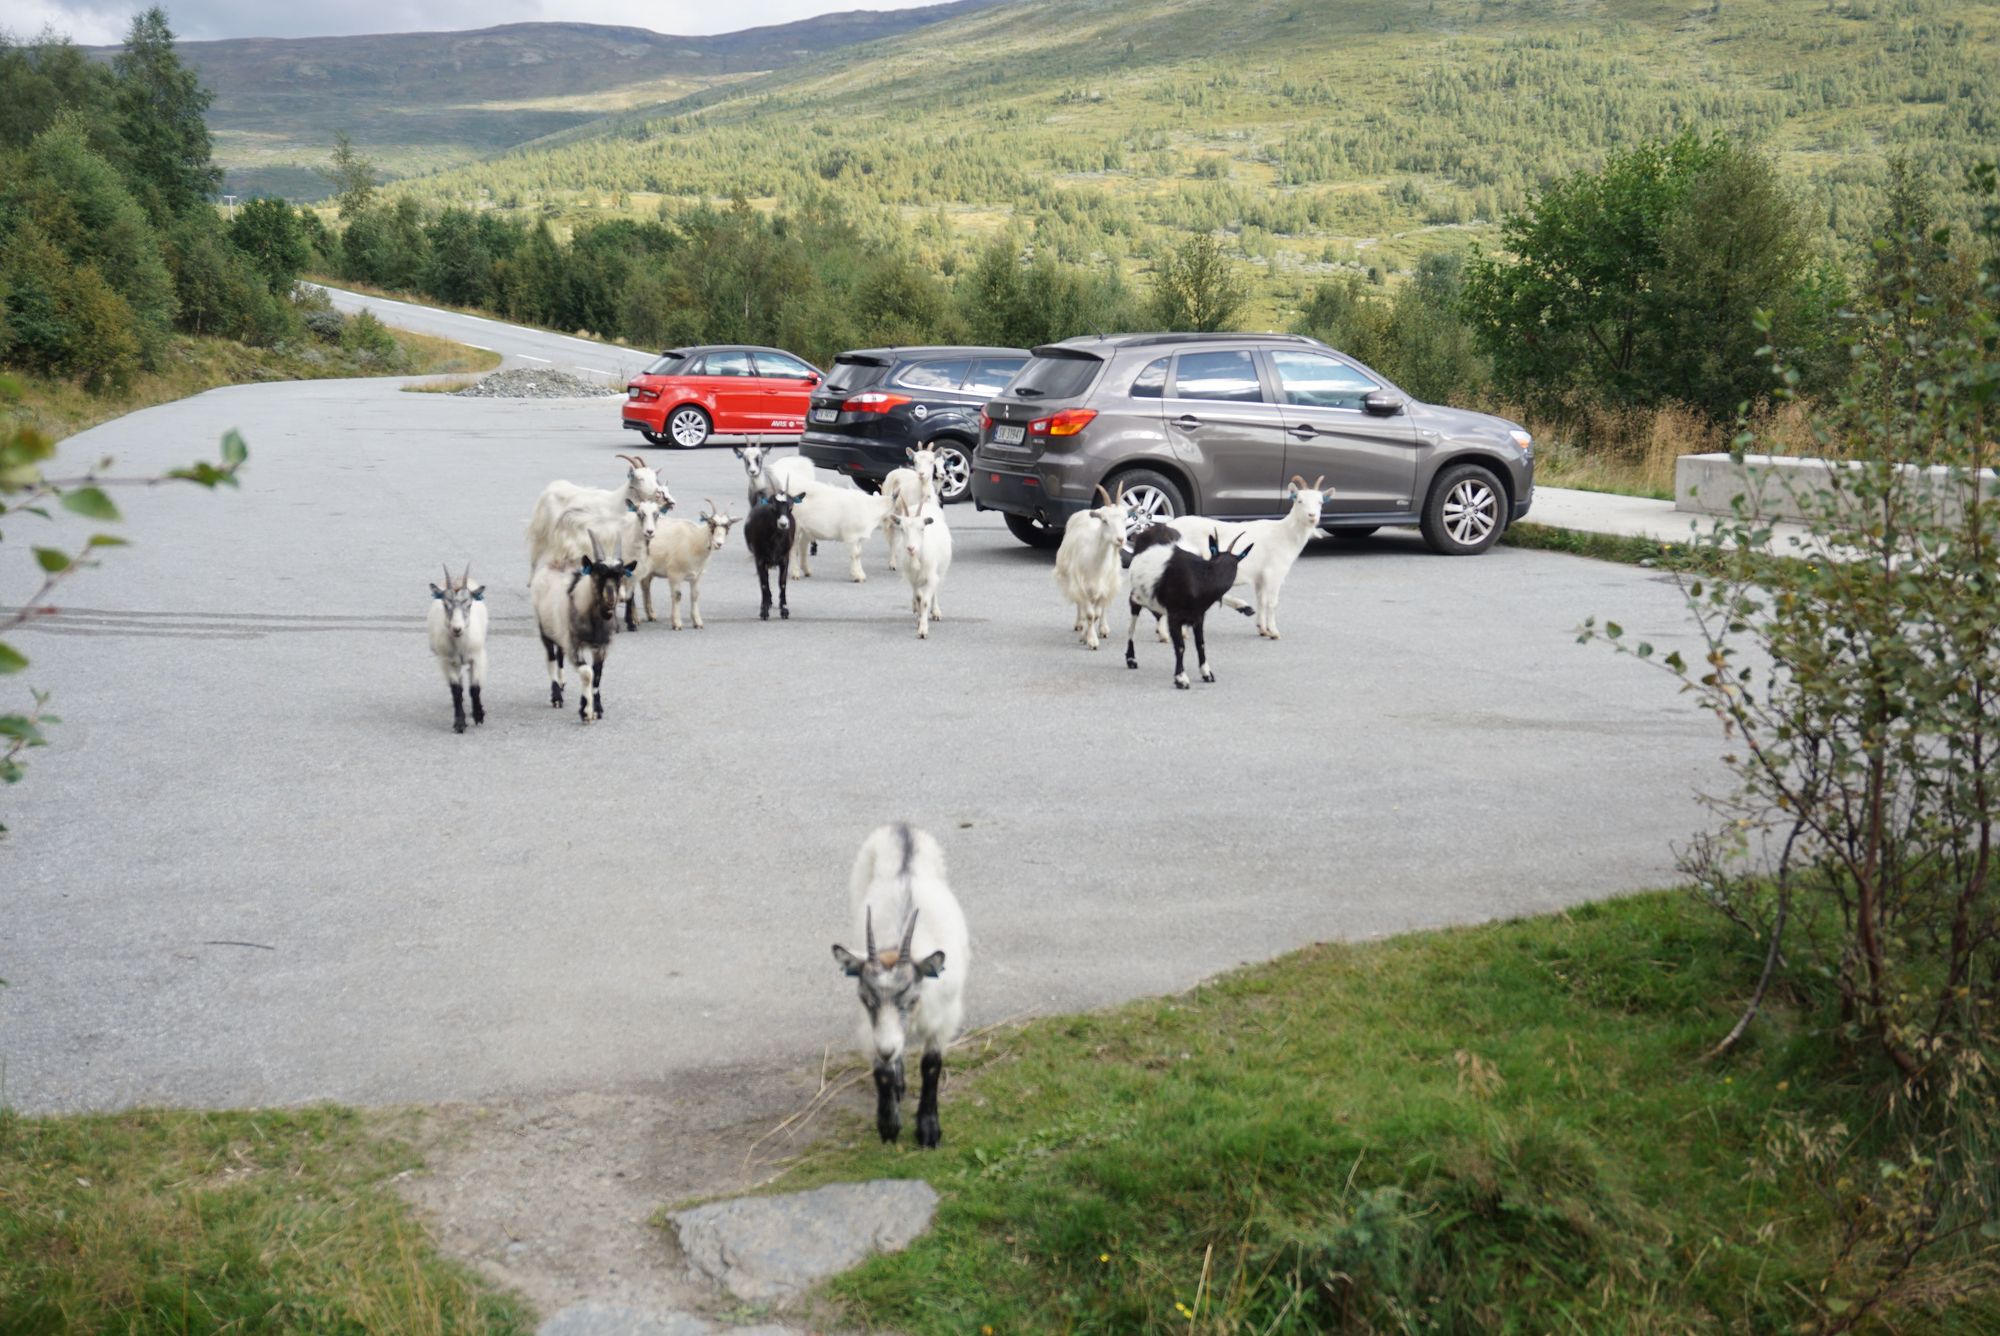 Second goat gang